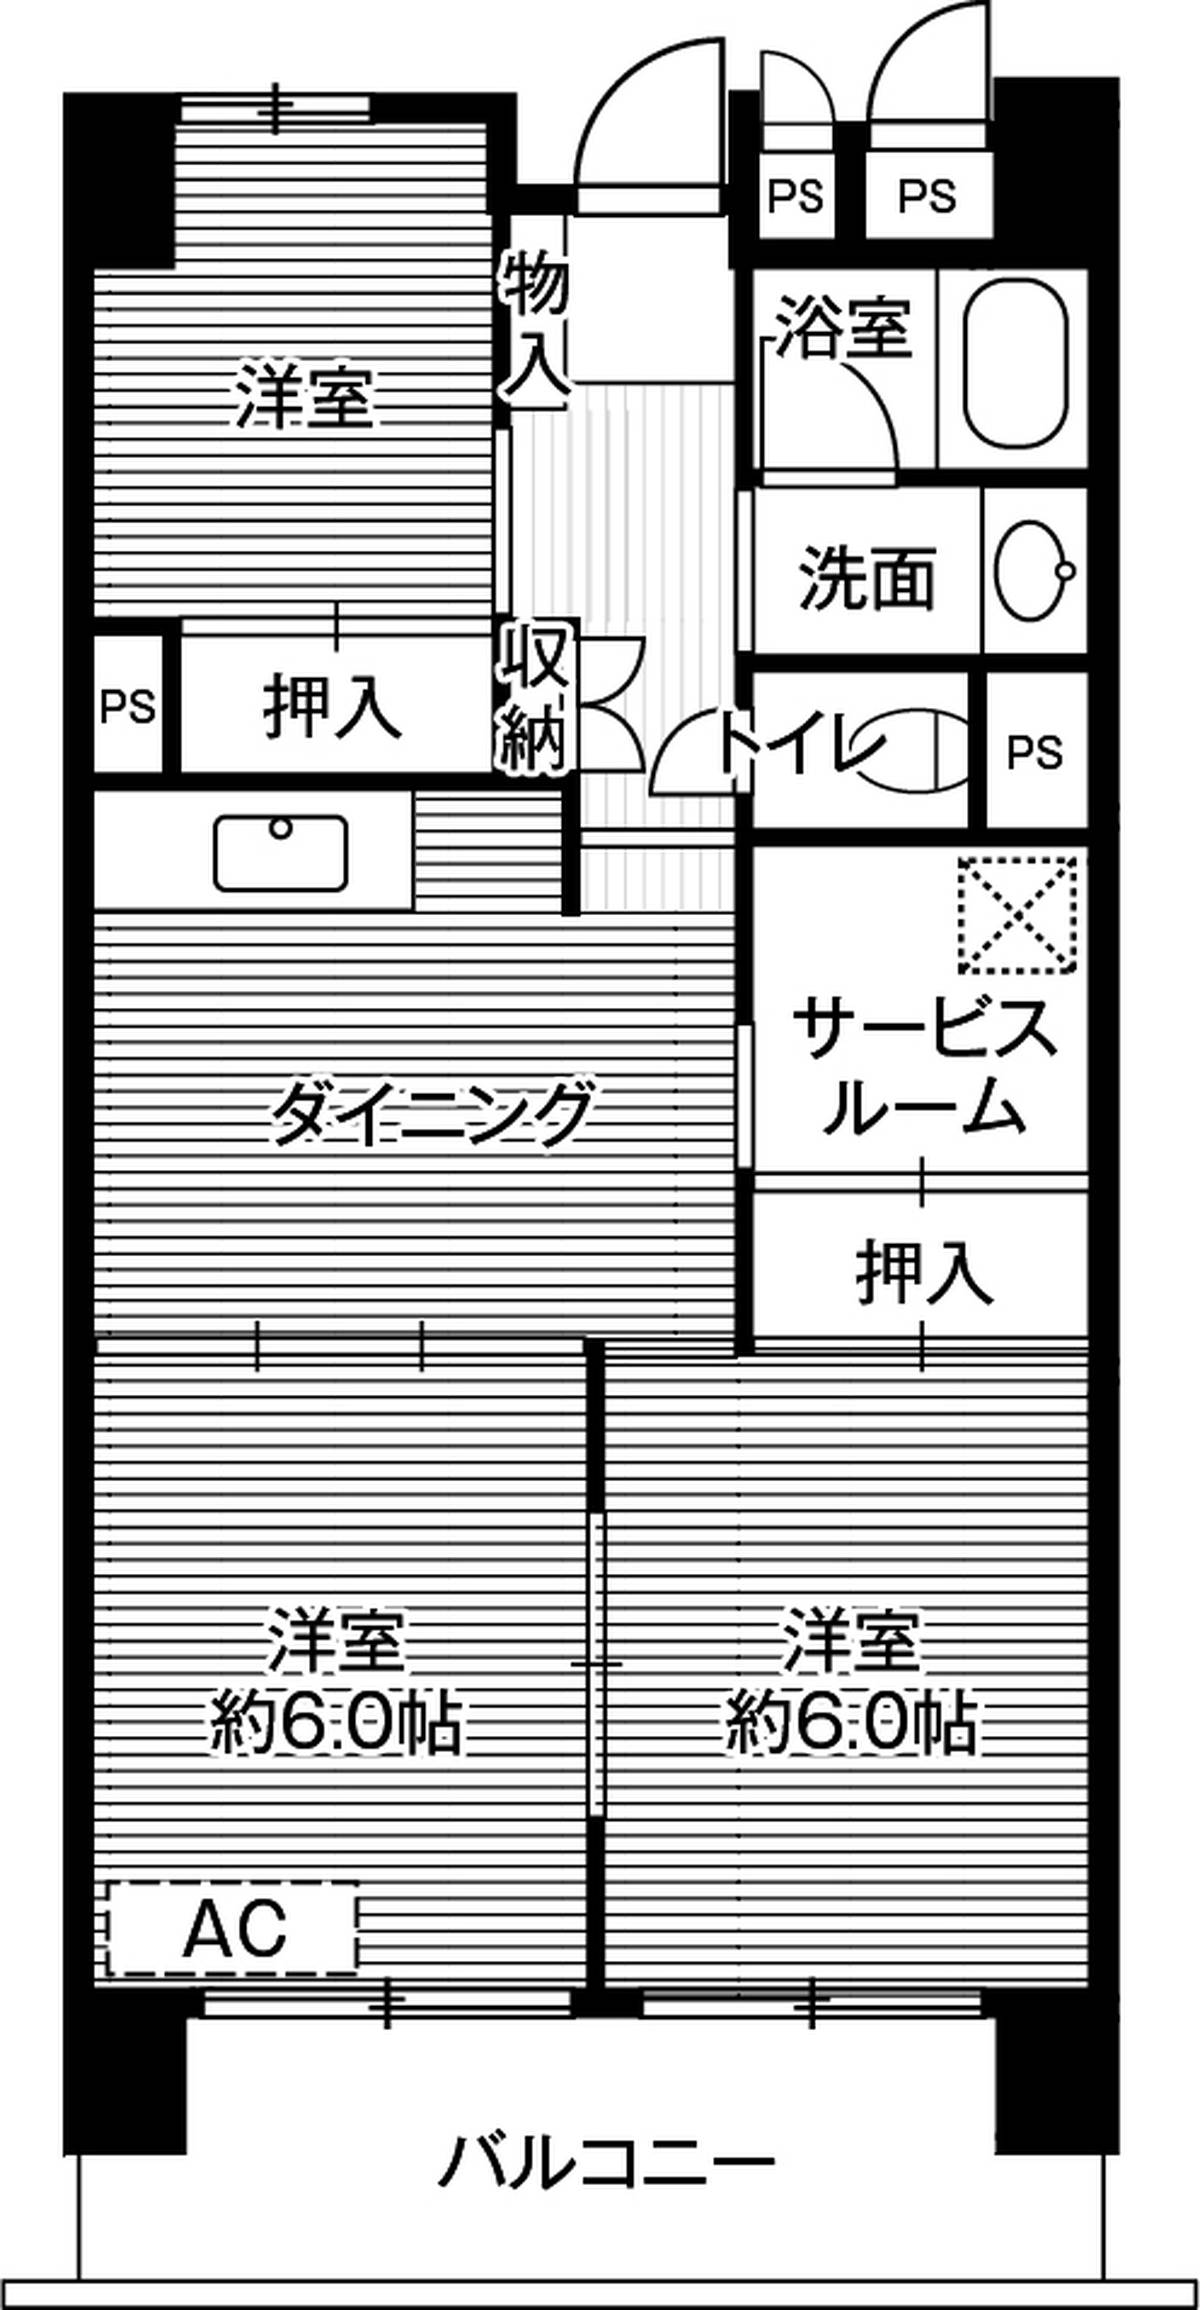 3SDK floorplan of Village House Narita Azuma Tower in Narita-shi